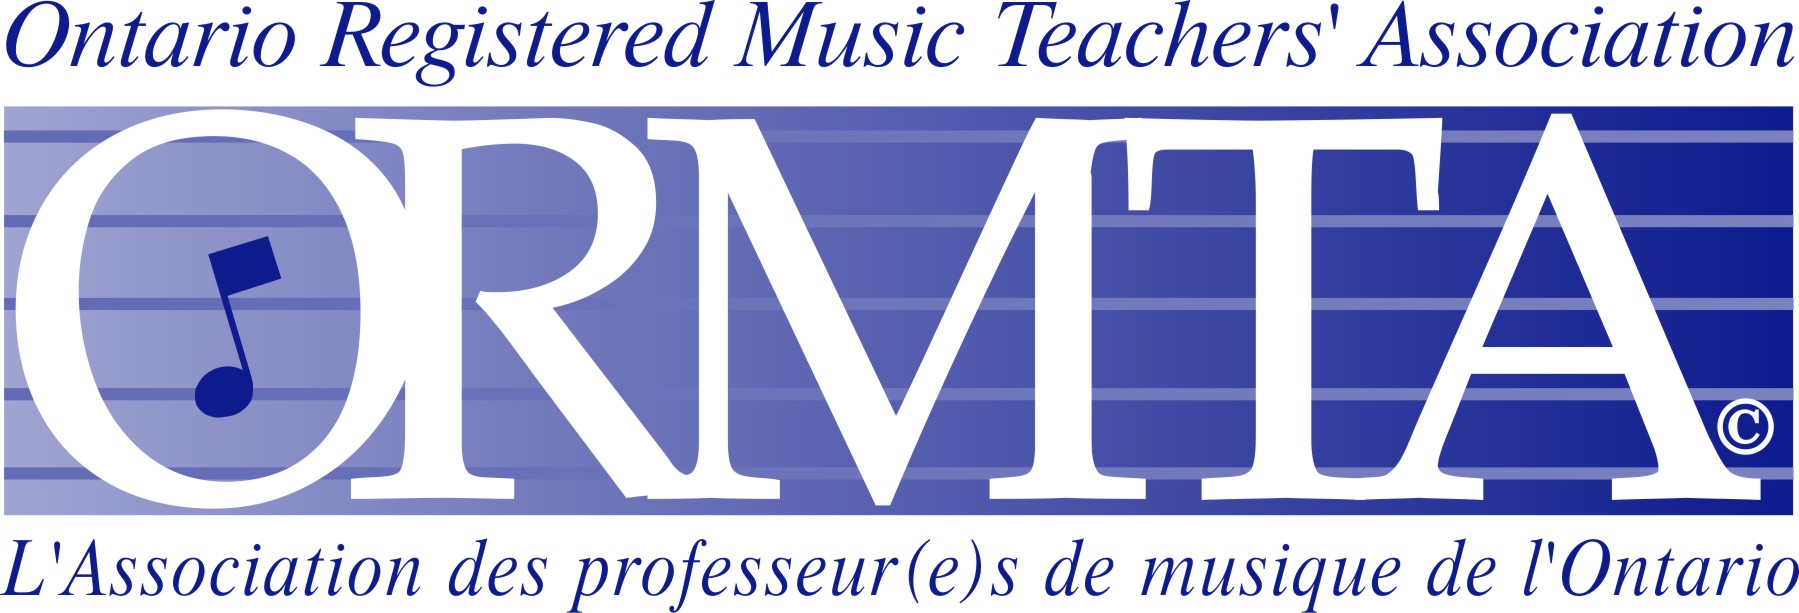 Ontario Registered Music Teachers' Association